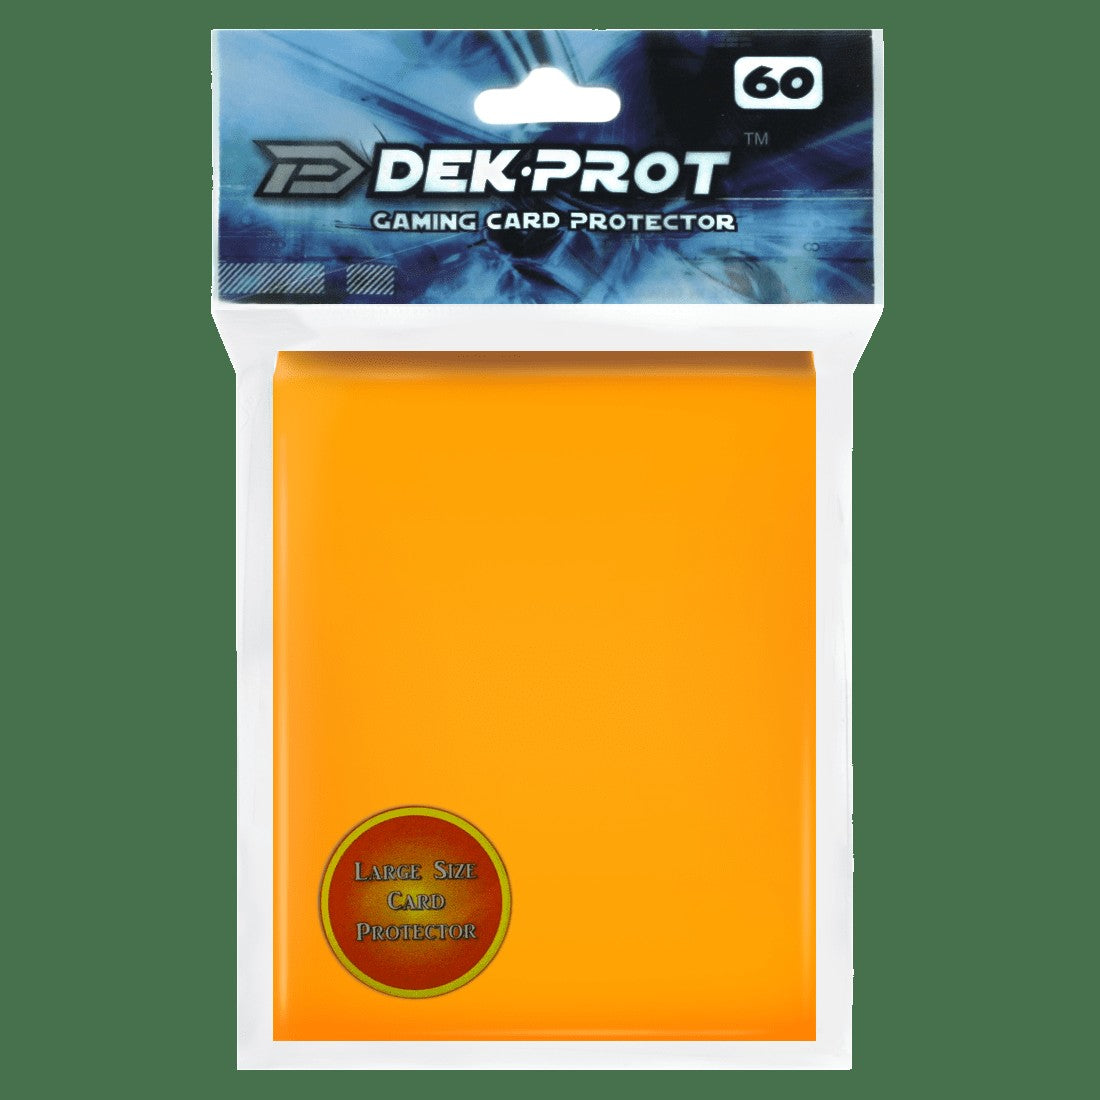 Dek Prot Standard Sized Card Sleeves - Mango Yellow (60 Card Sleeves)